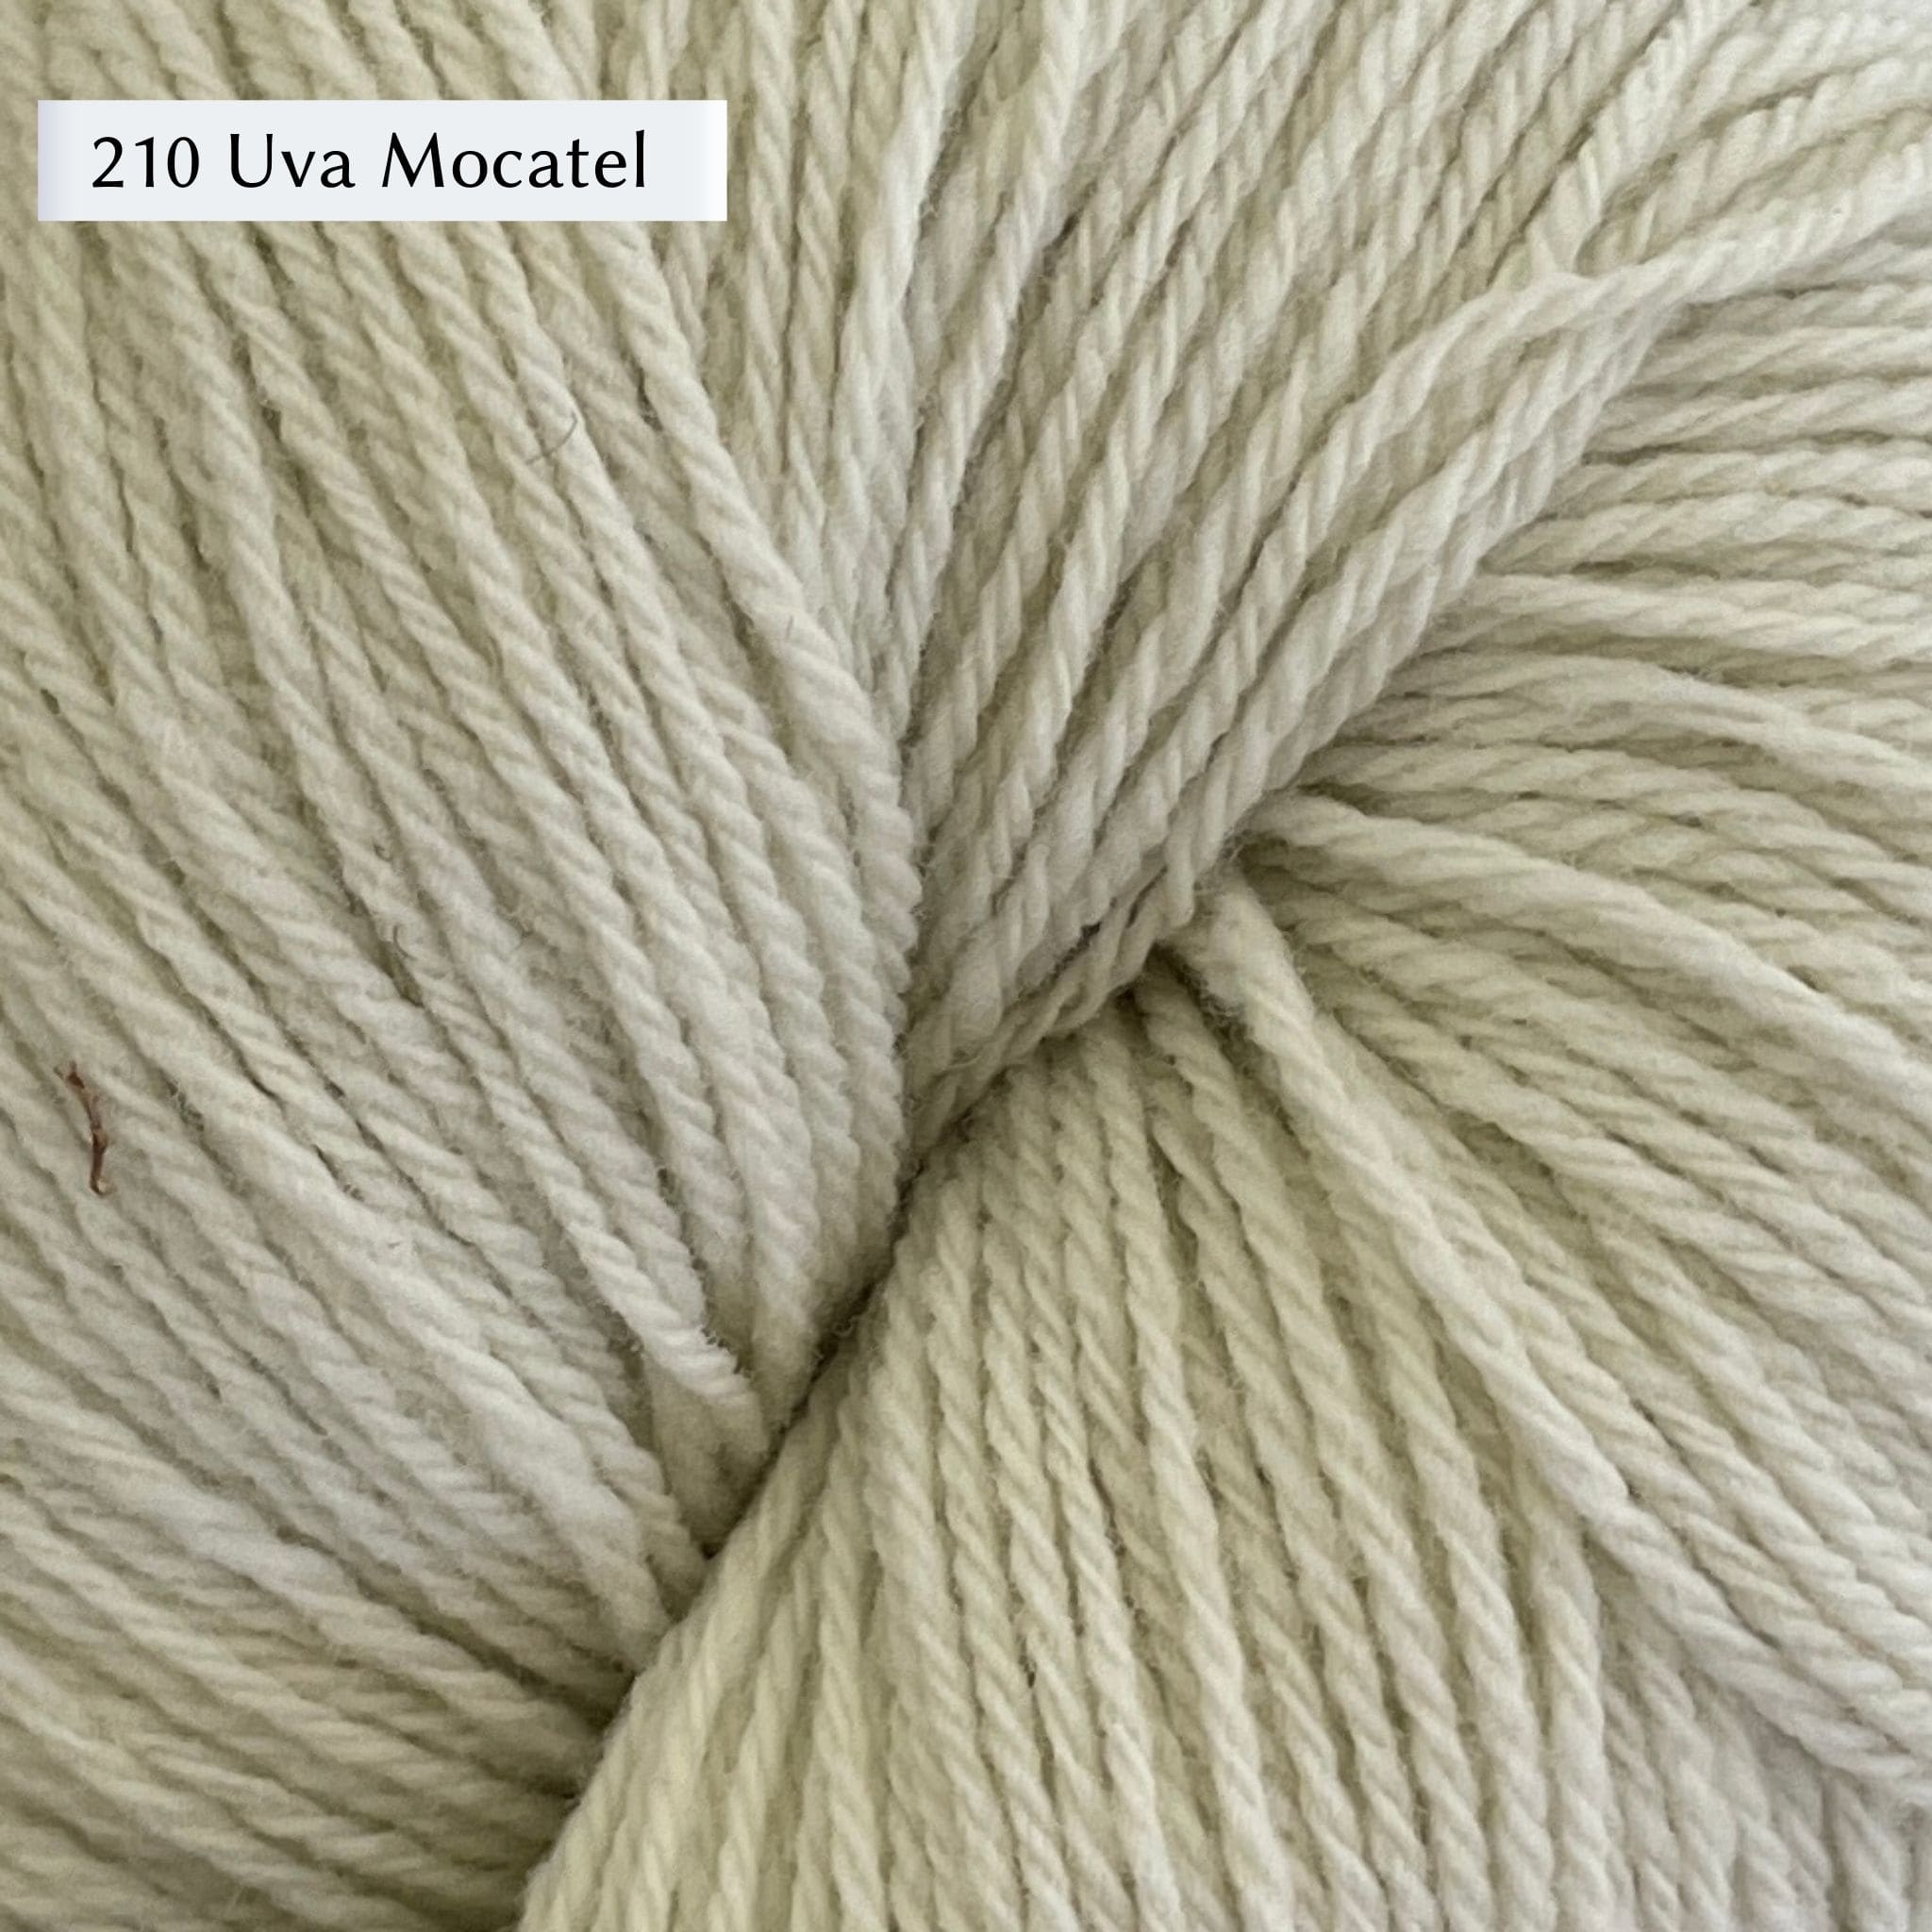 WoolDreamers Dehesa de Barrera, a fingering weight yarn, in color 210 Uva Mocatel, a very light greenish natural